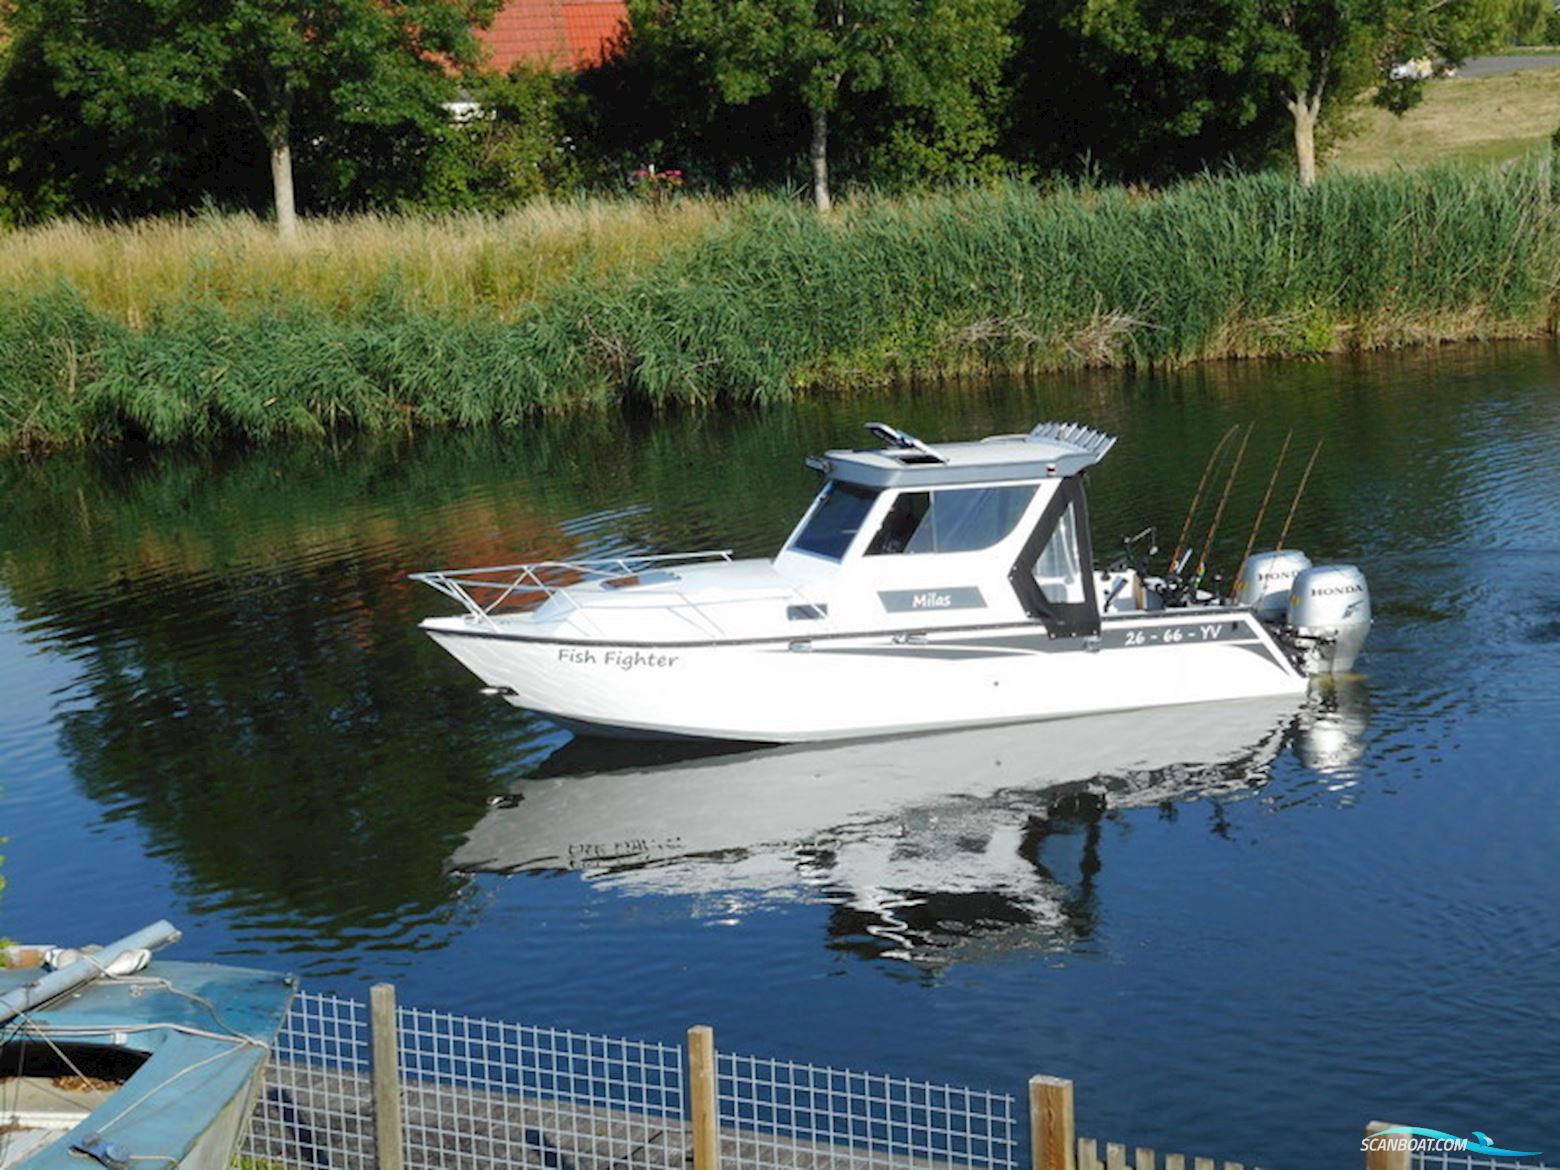 Fish Fighter Zelfbouw Motor boat 2018, with Honda engine, The Netherlands